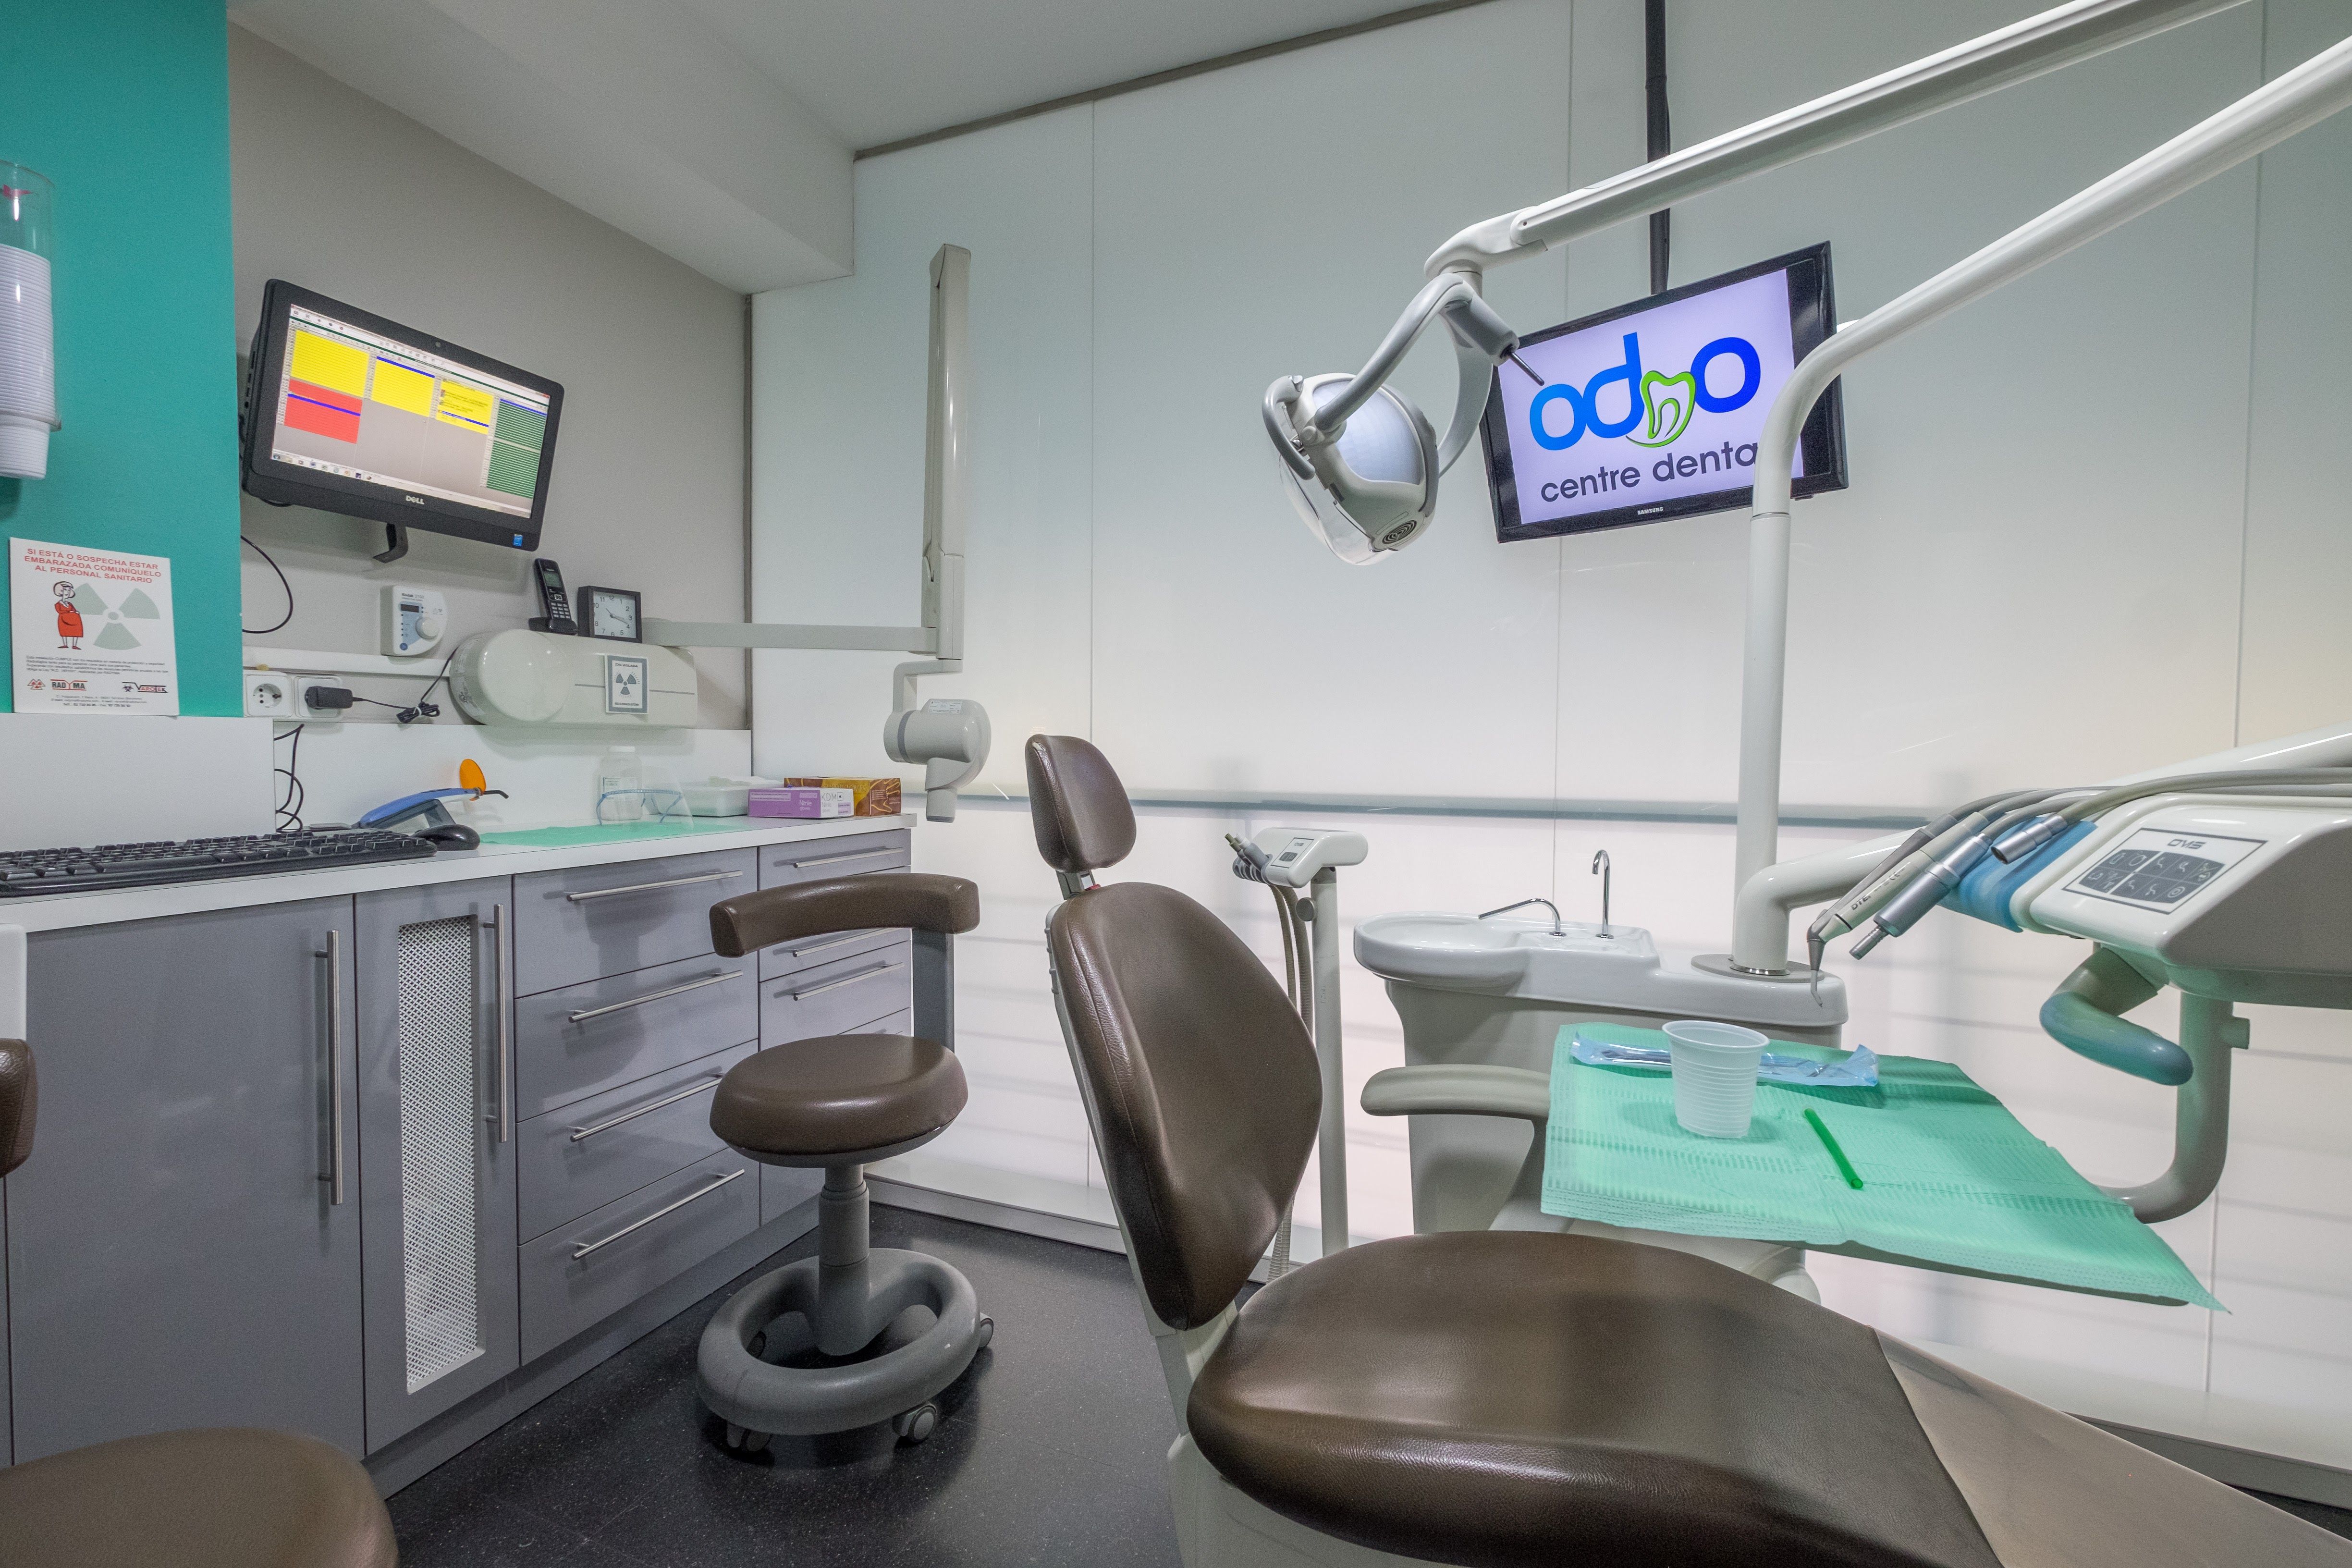 Foto 10 de Clínica dental en Barcelona | Centre Dental Oddo